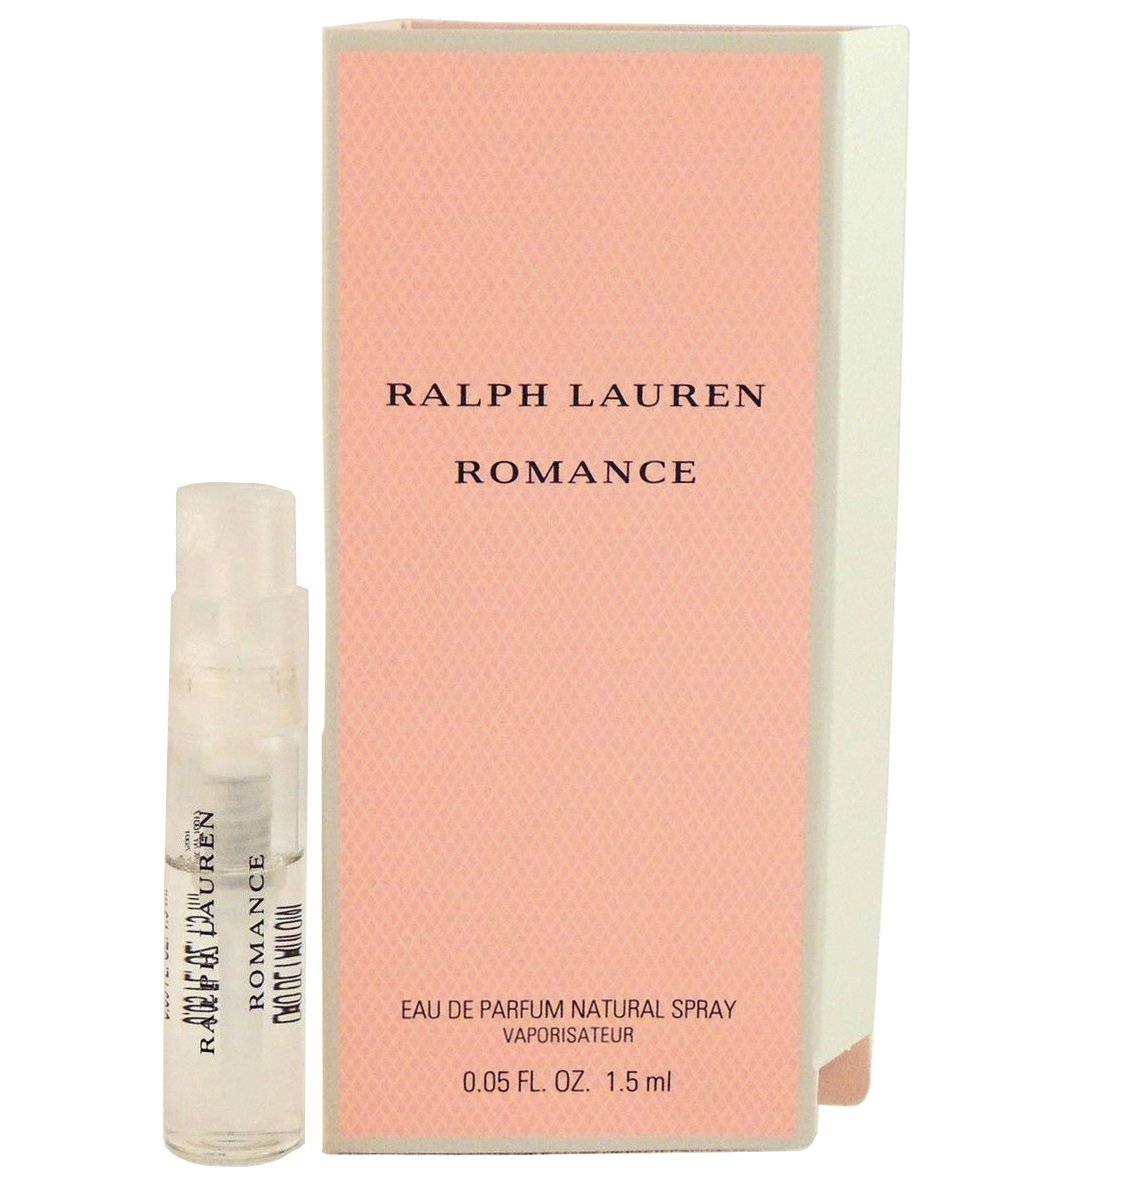 Romance by Ralph Lauren Perfume Vial 